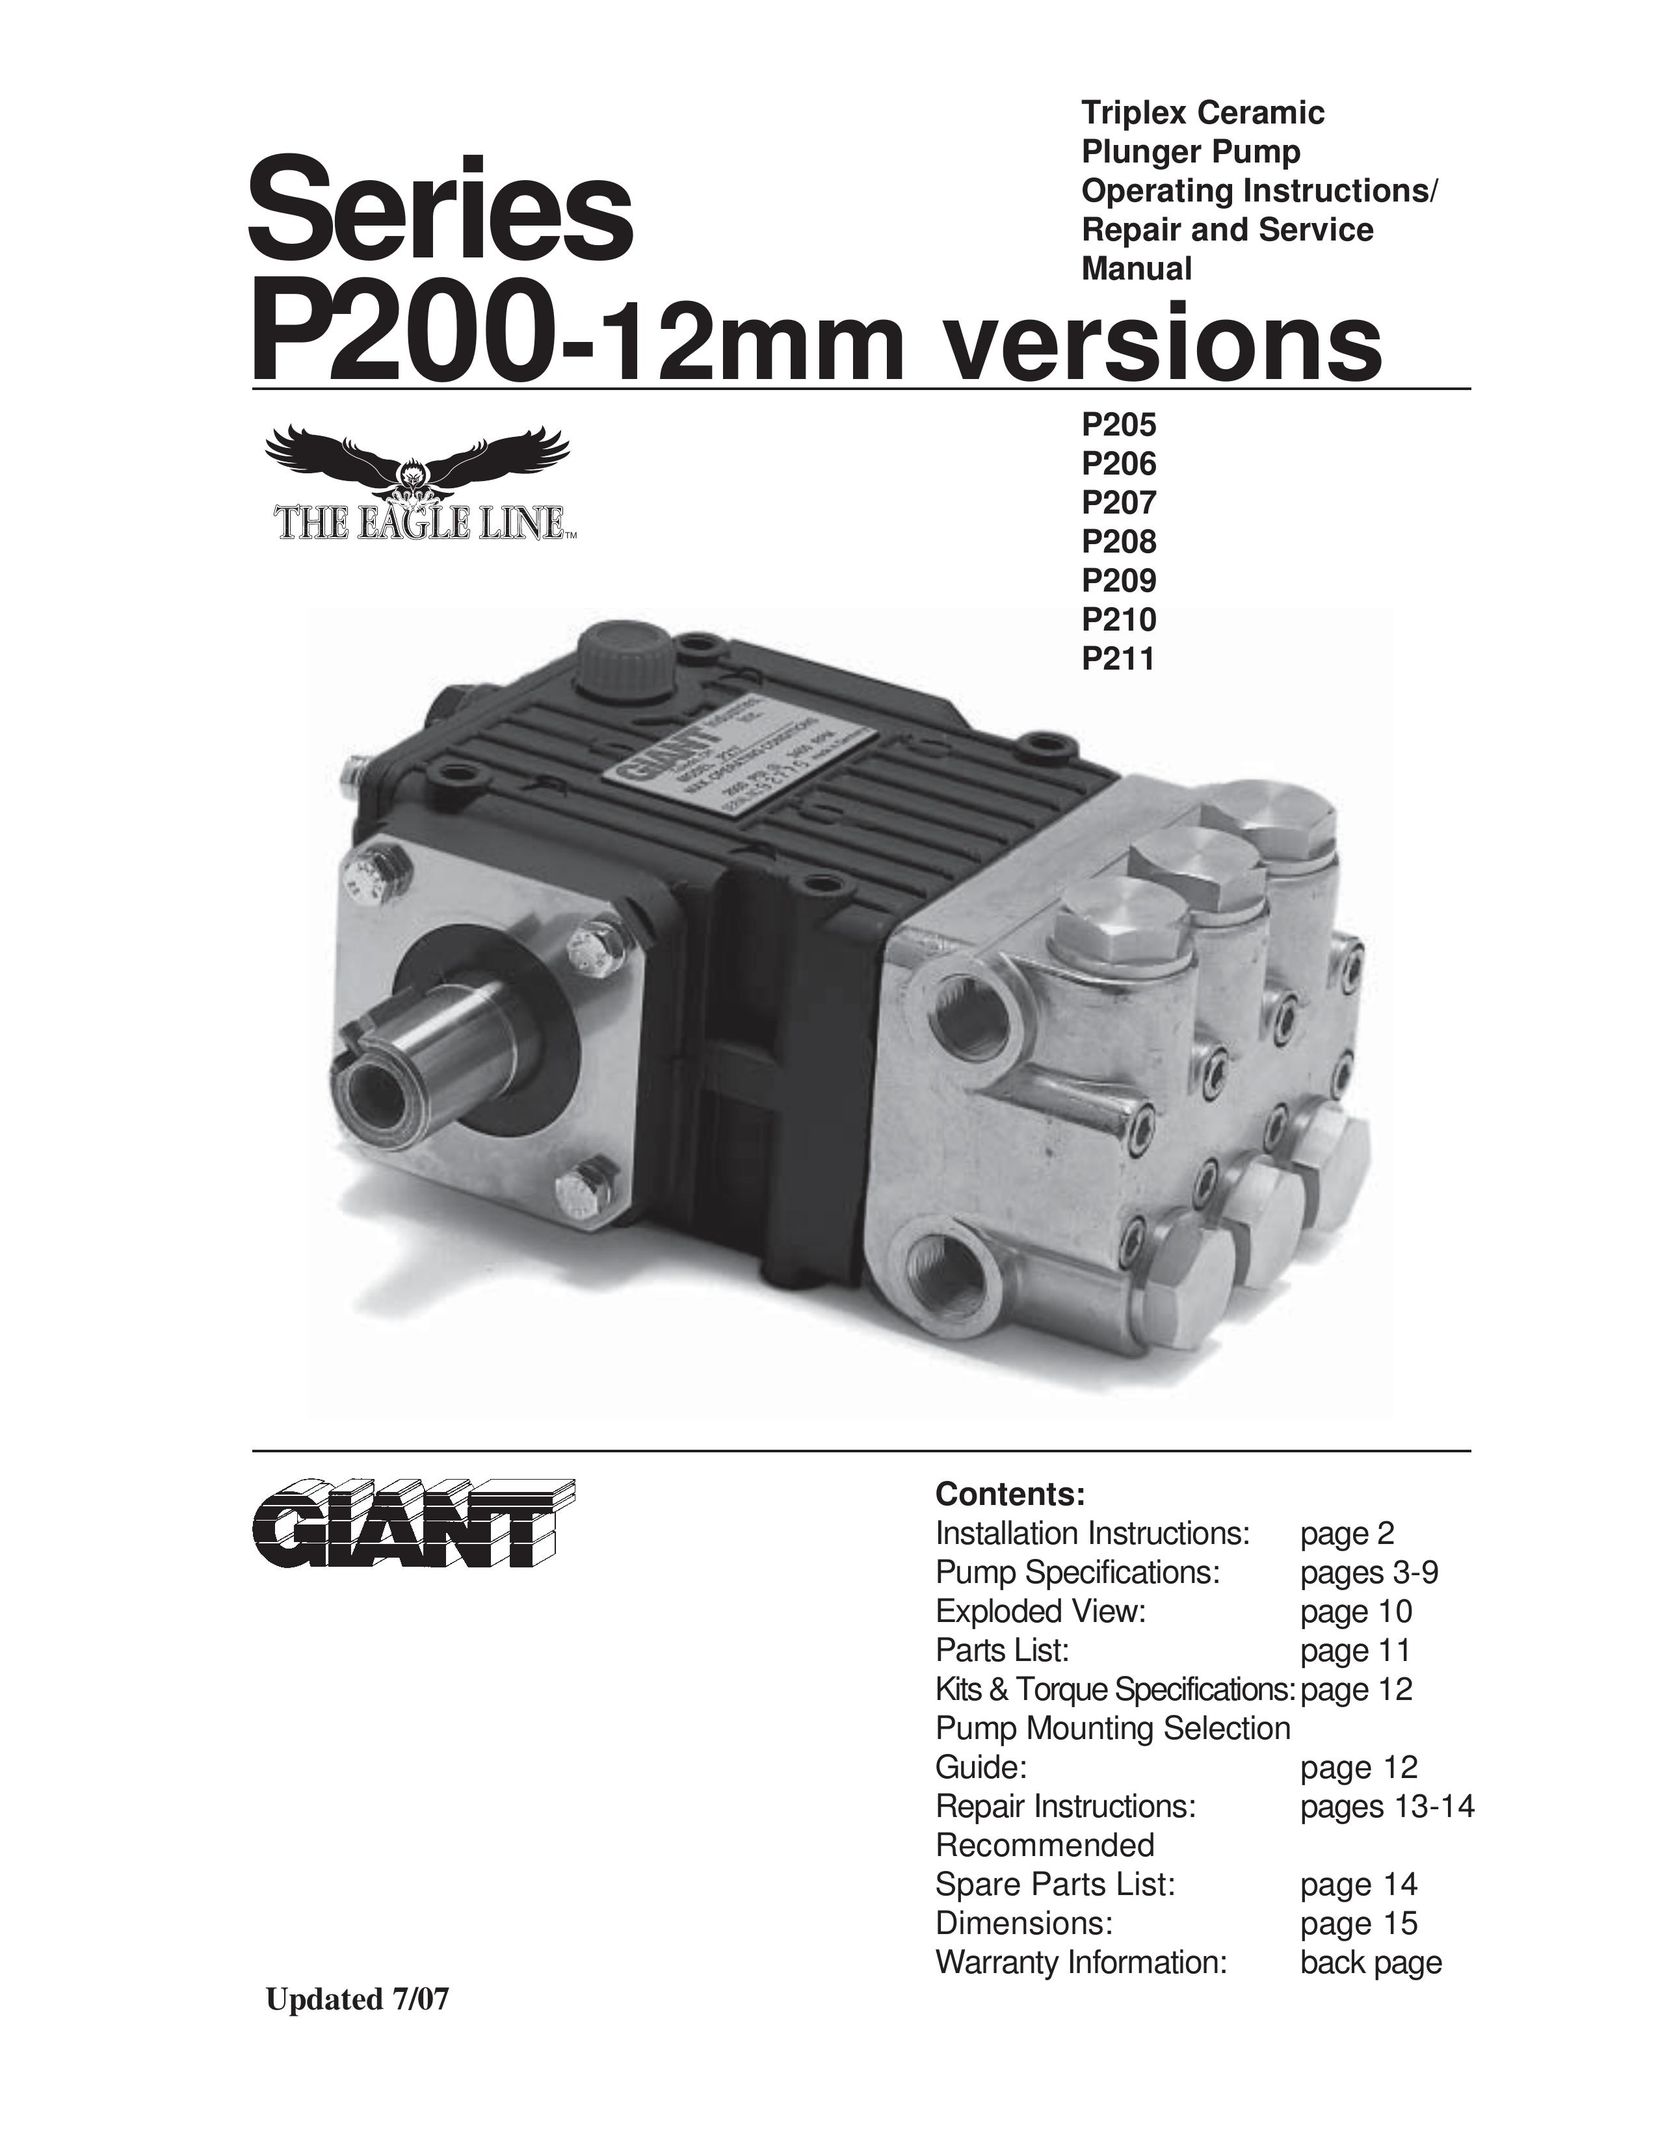 Giant P209 Heat Pump User Manual